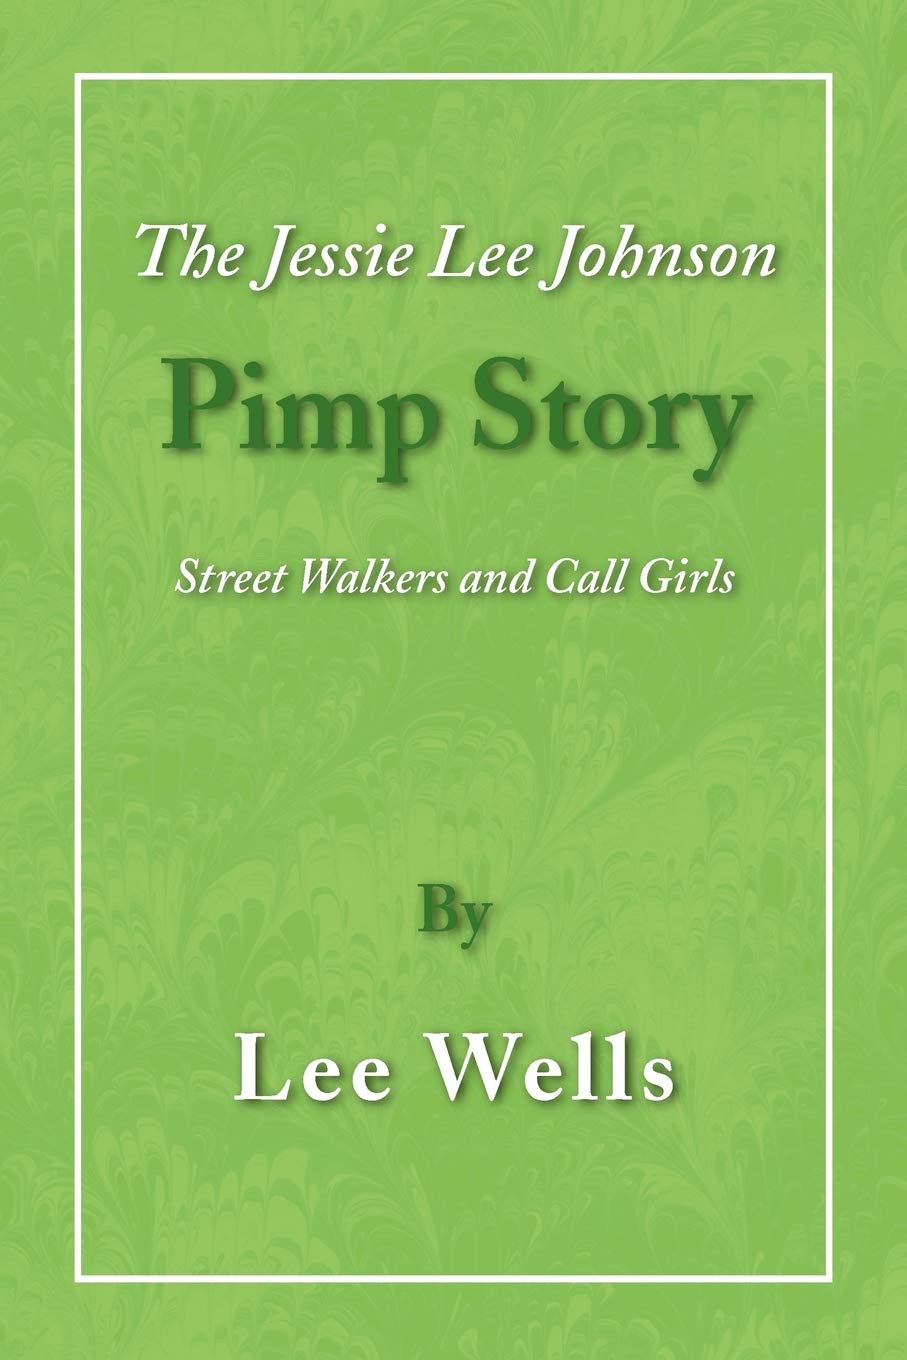 The Jessie Lee Johnson Pimp Story - SureShot Books Publishing LLC